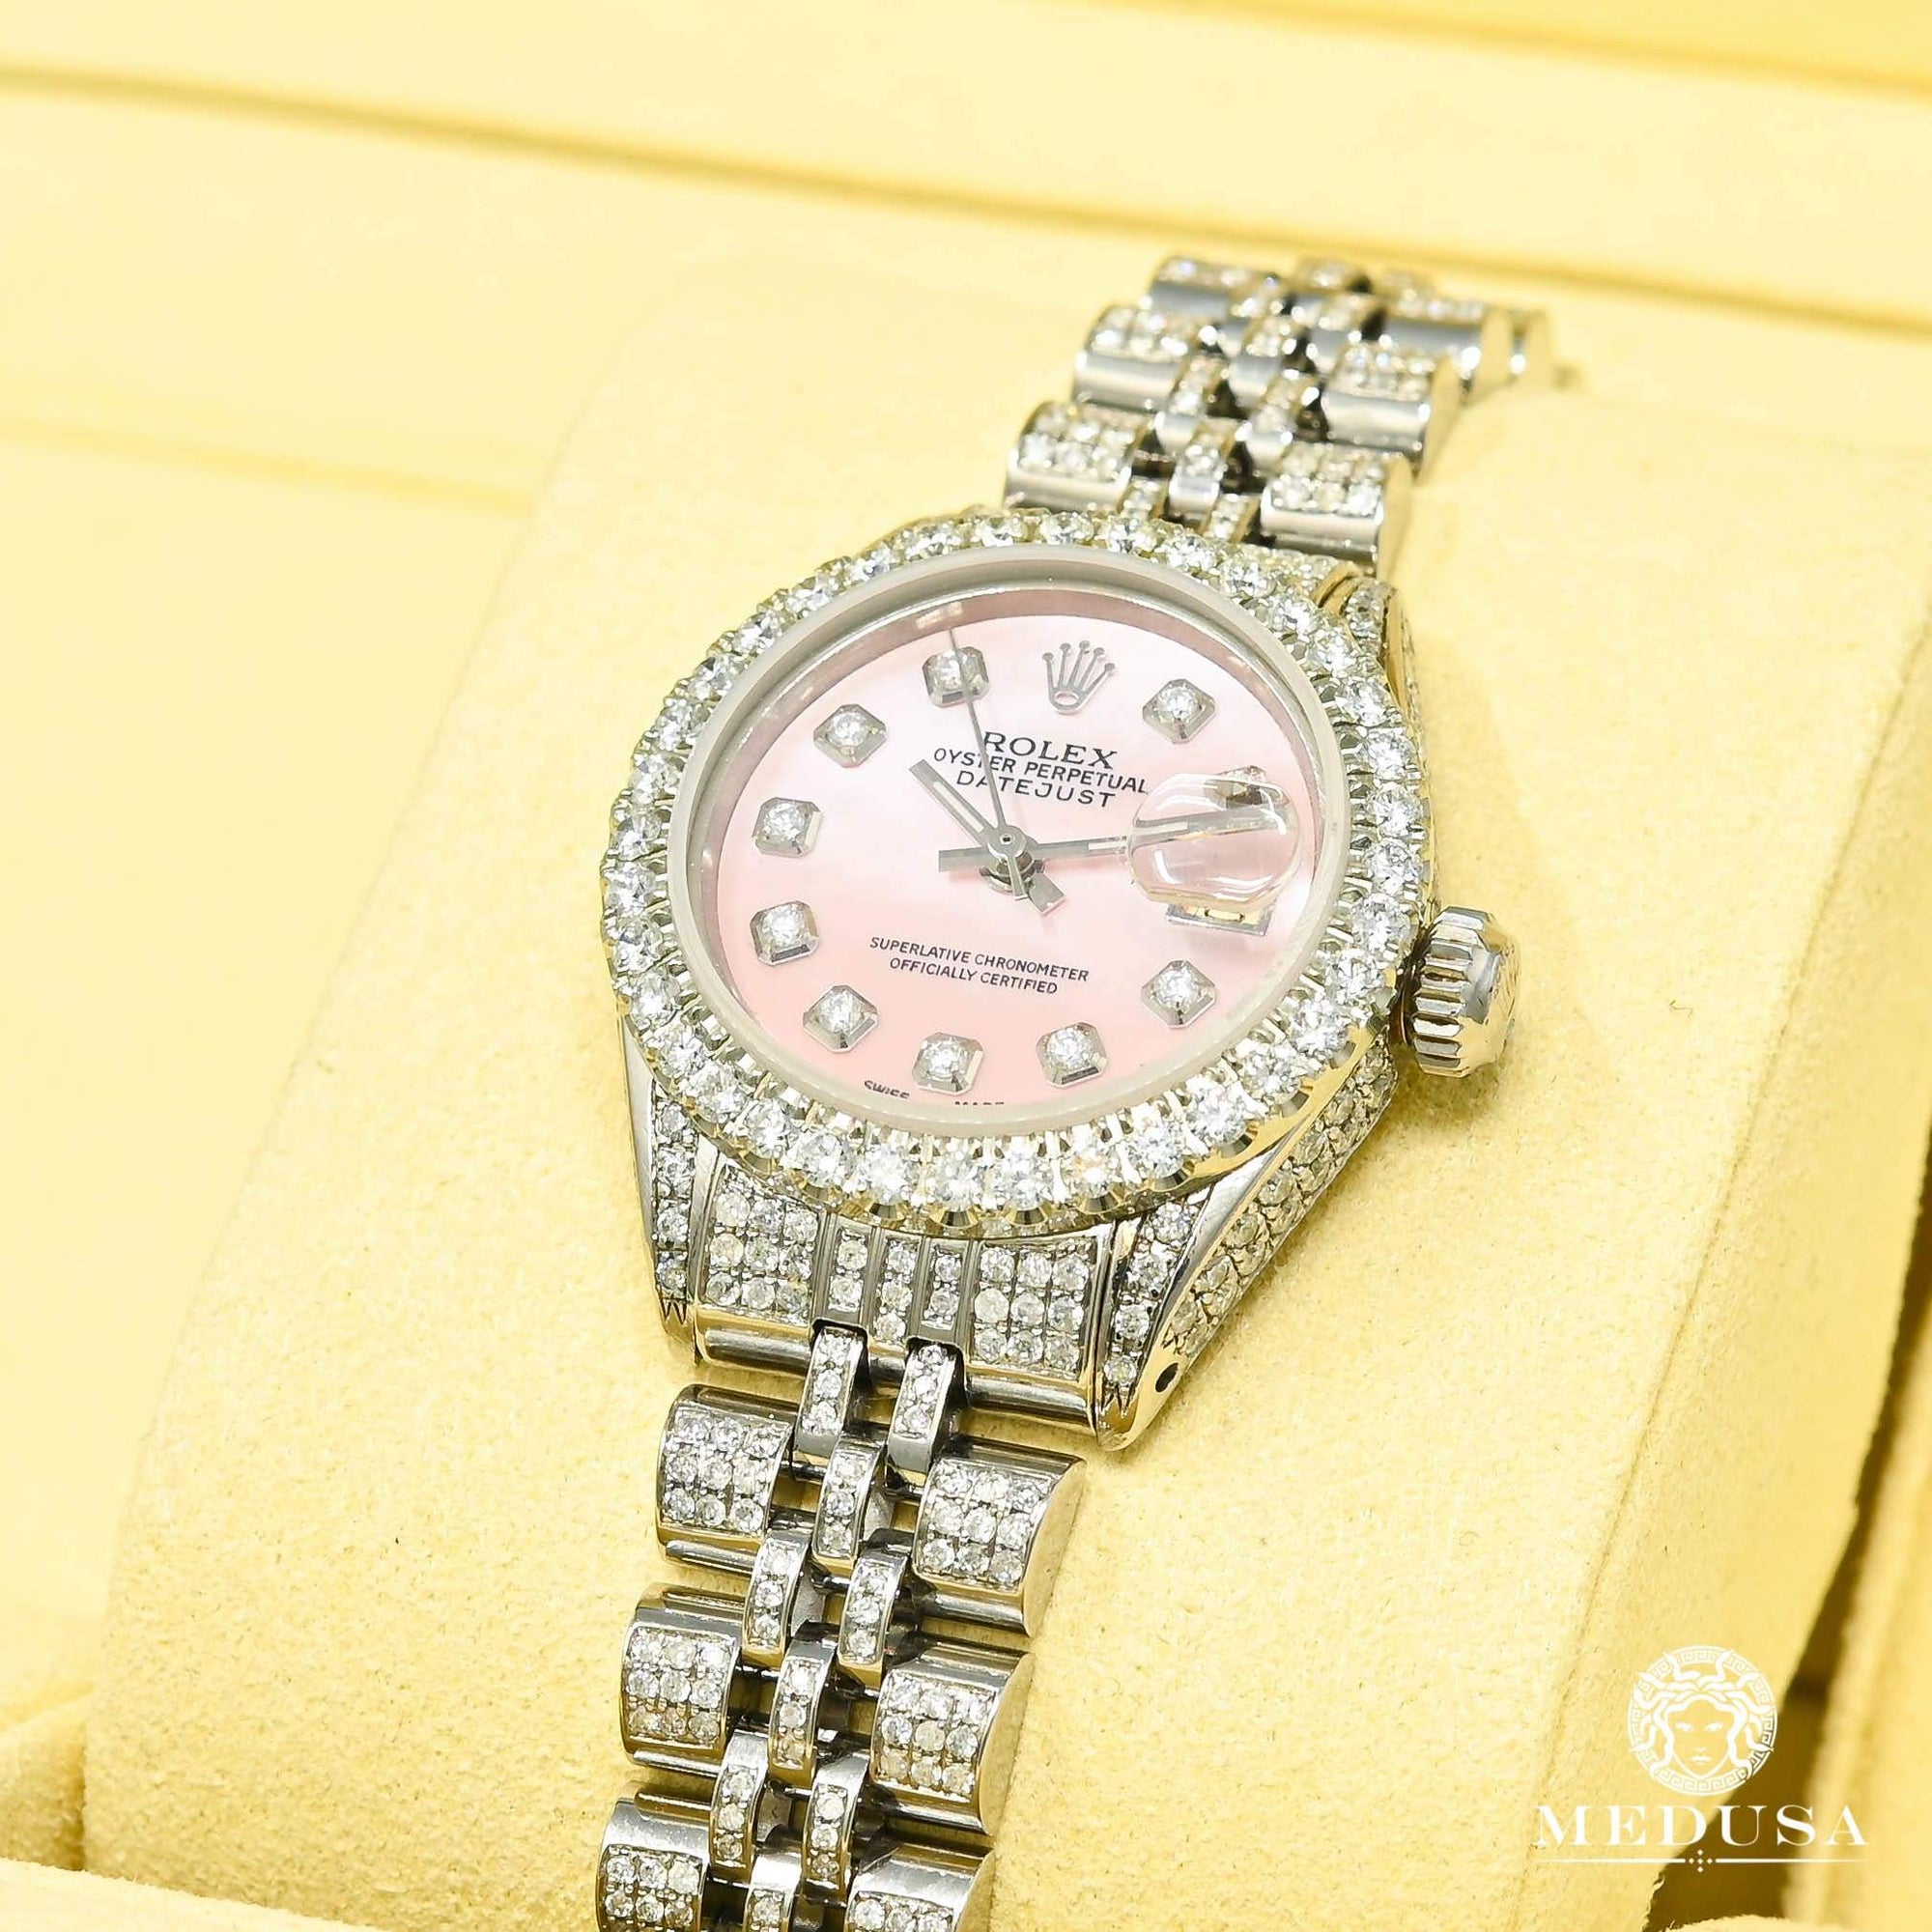 Evaluation Discard abscess Rolex watch | Rolex Datejust 26mm - Pink Stainless Iced Ladies Watch |  Medusa jewelry - Medusa Jewelry